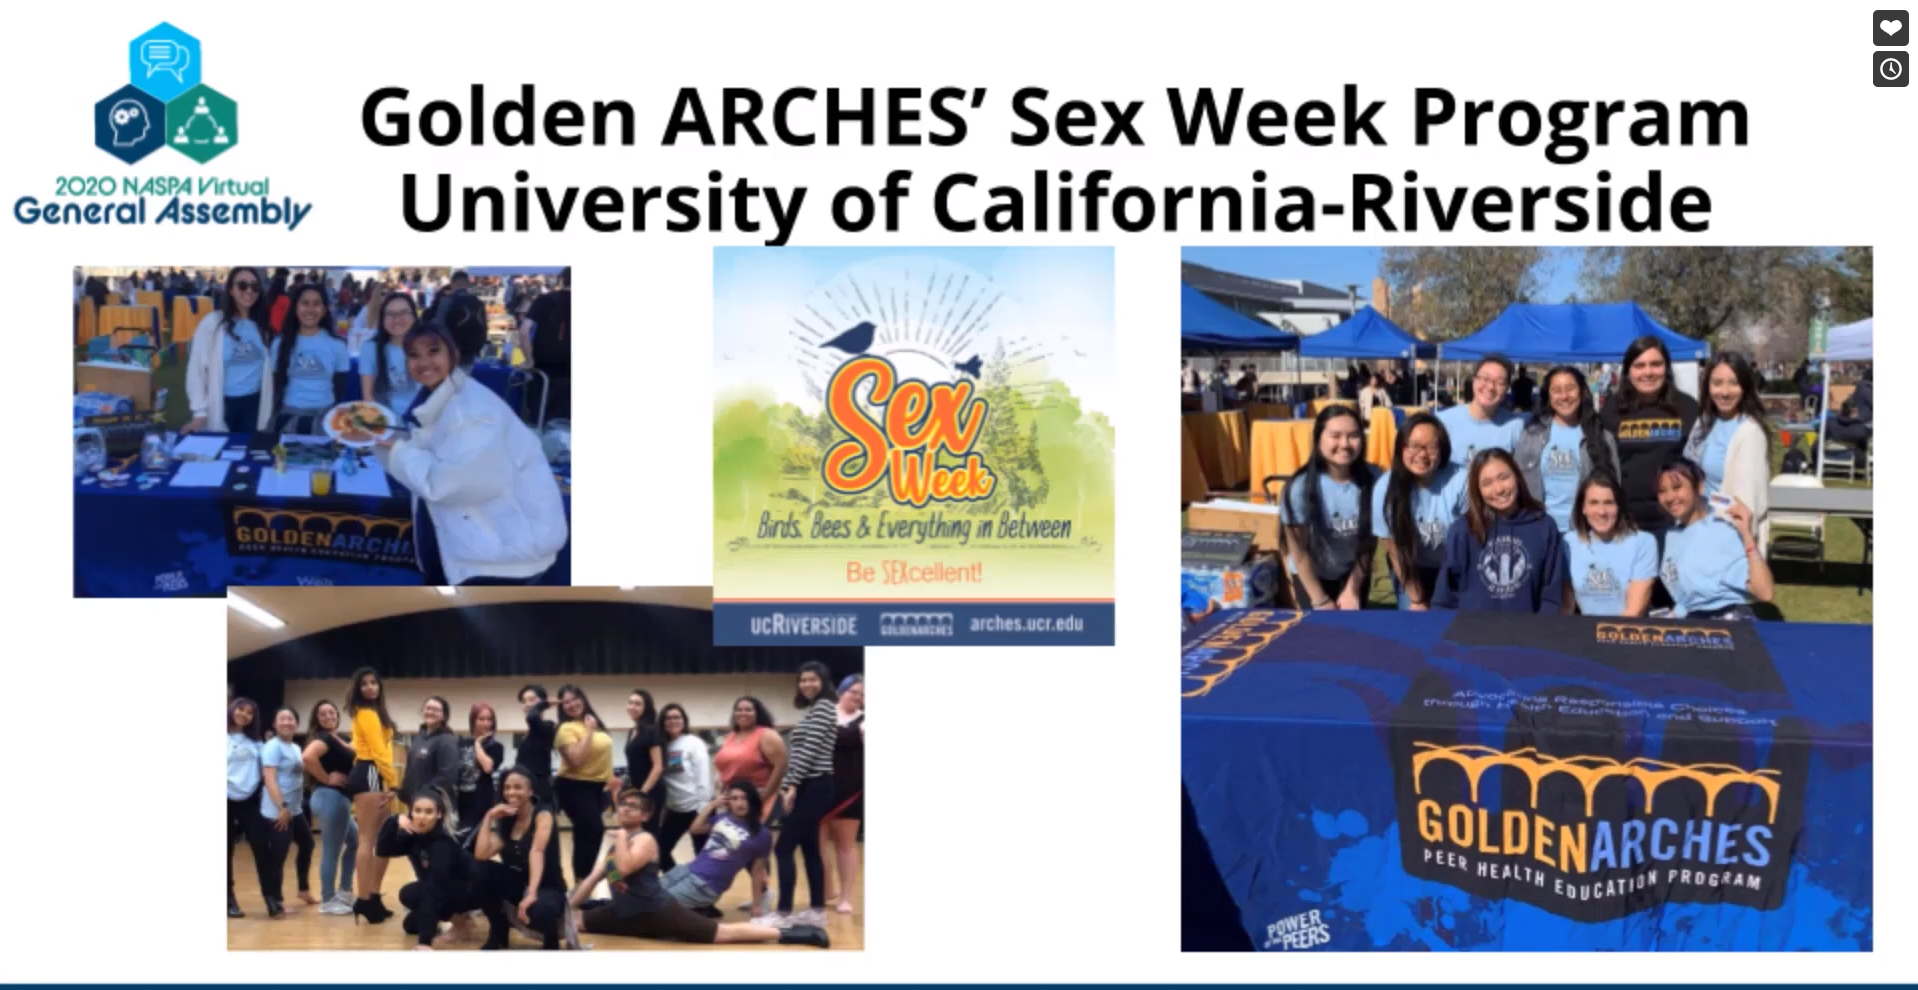 Golden ARCHES Sex Week. 2020 NASPA Virtual General Assembly. Photos of peer educators wearing sex week shirts.